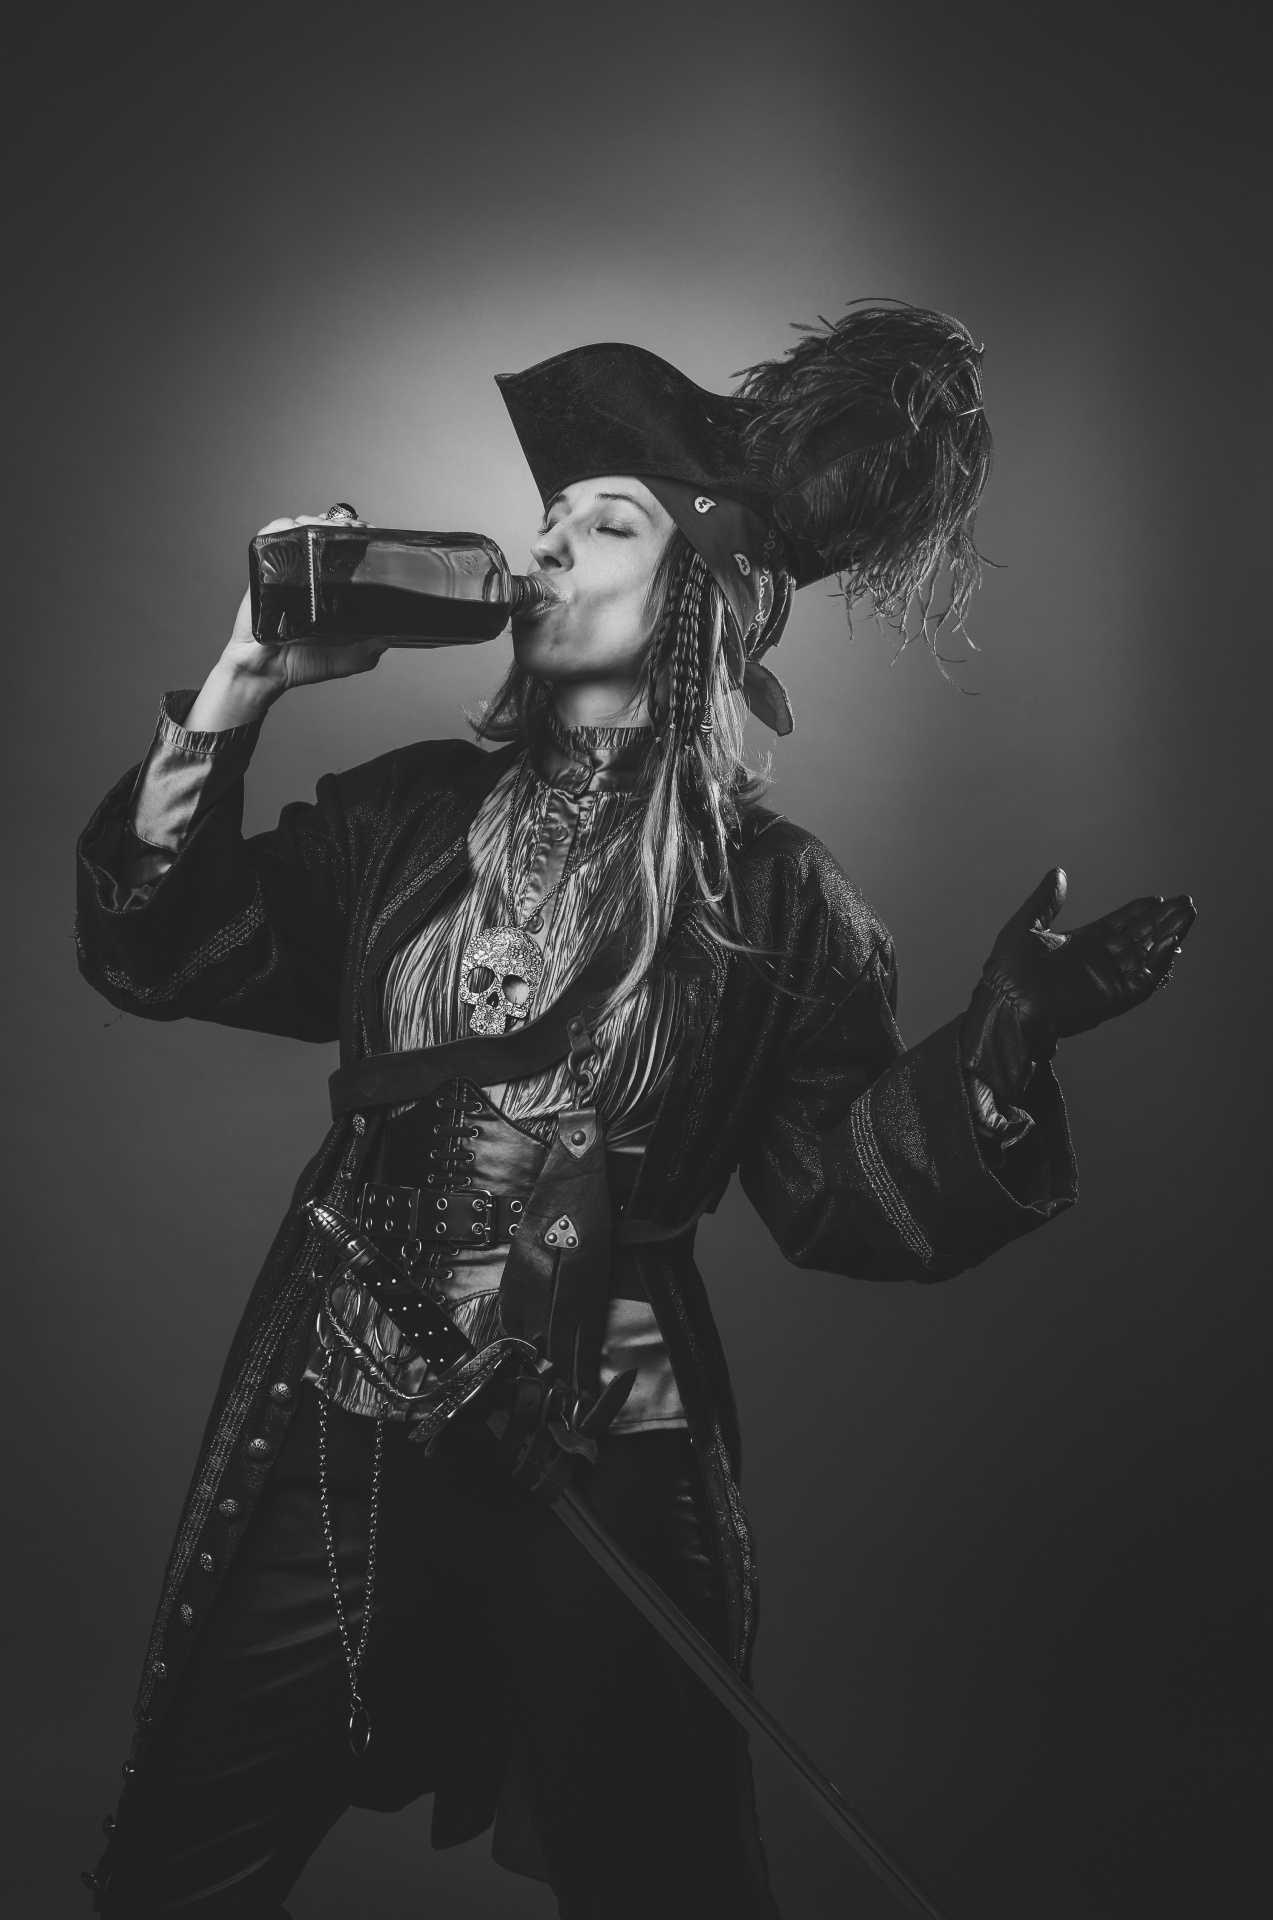 pirate, bandit, image, cosplay, woman, sea, corsair, captain, booze, alcoholism